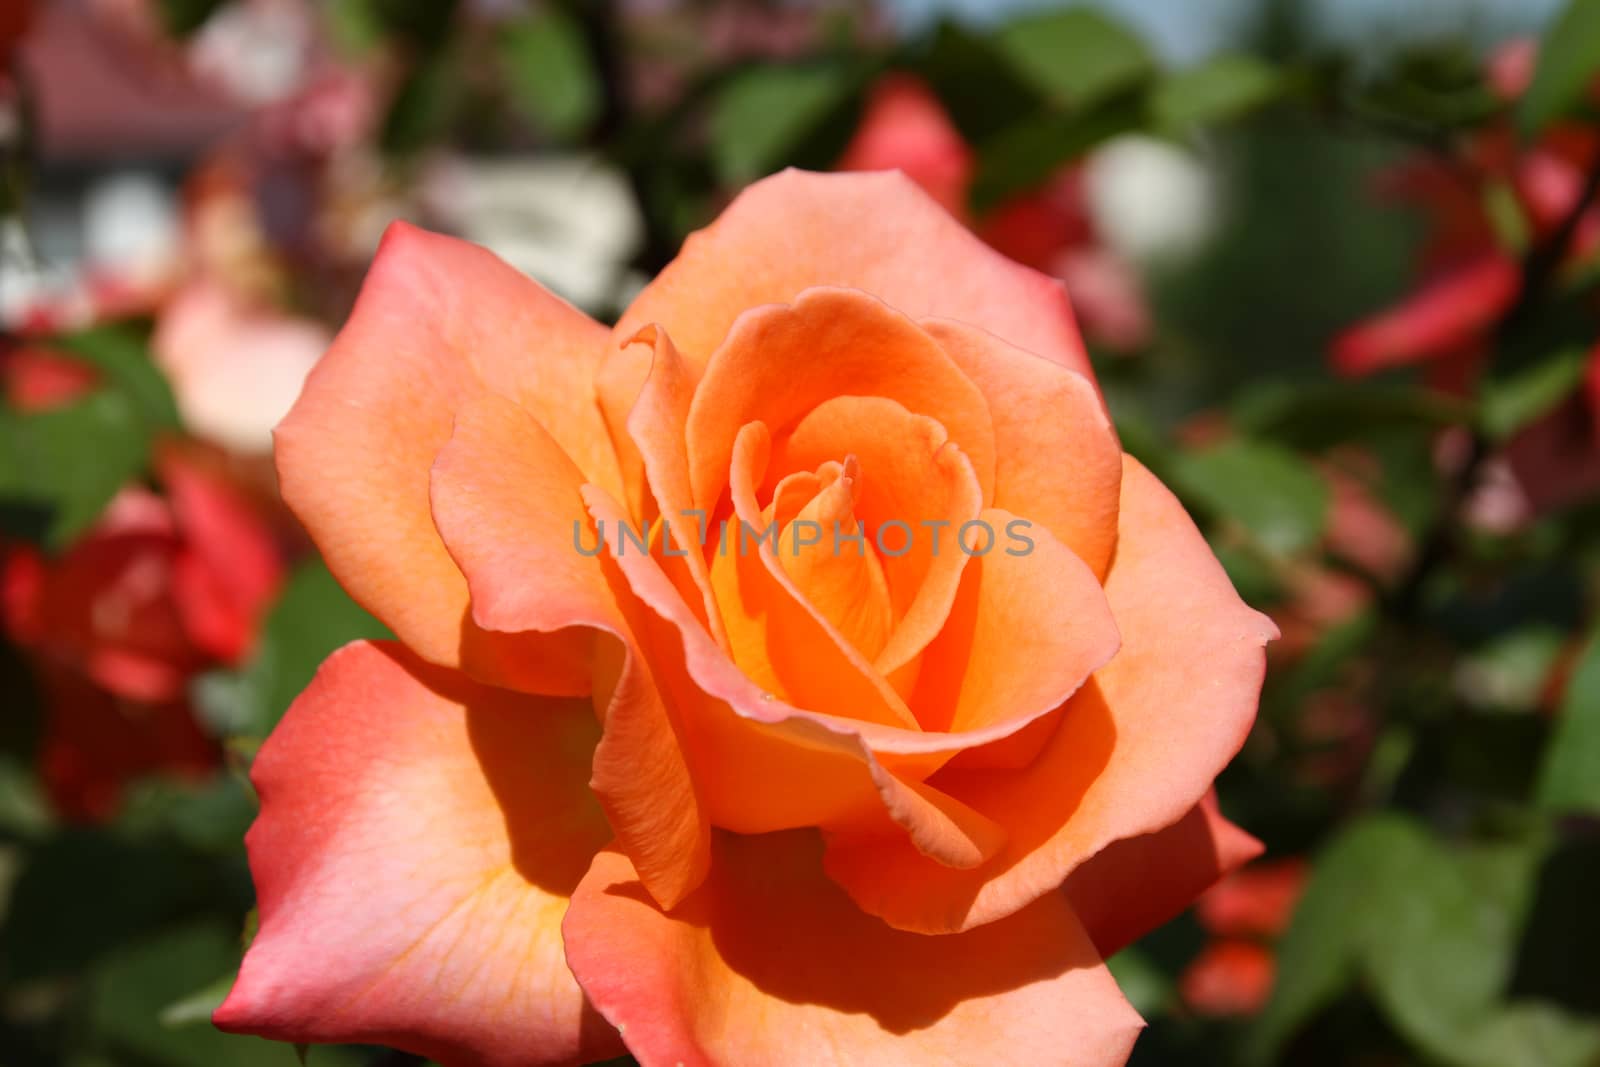 rose orange on the garden, macro close up